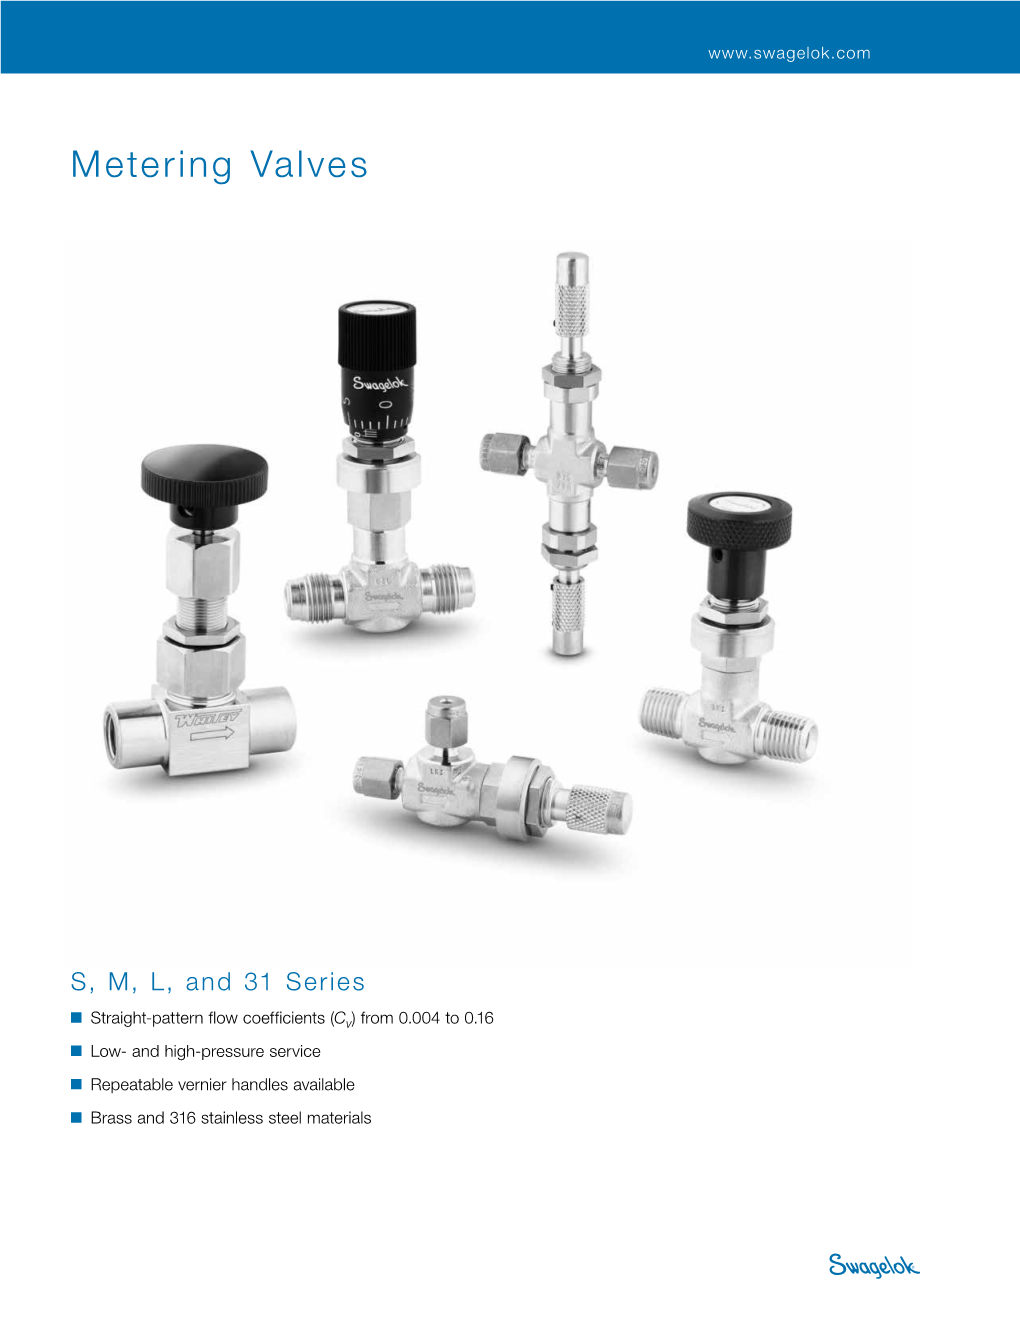 Metering Valves S, M. L, and 31 Series